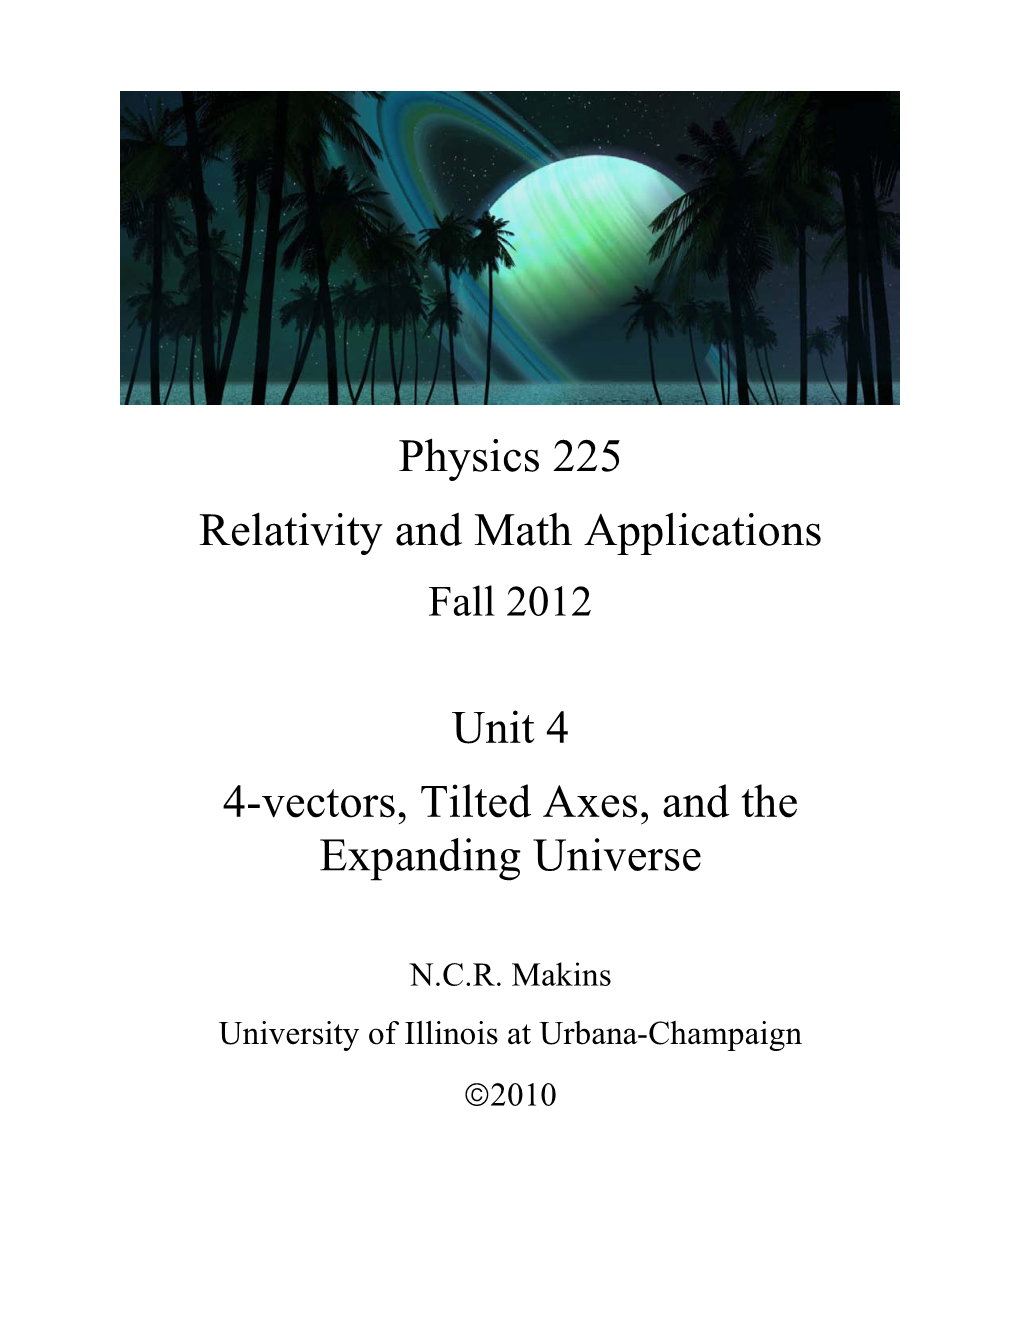 Physics 225 Relativity and Math Applications Unit 4 4-Vectors, Tilted